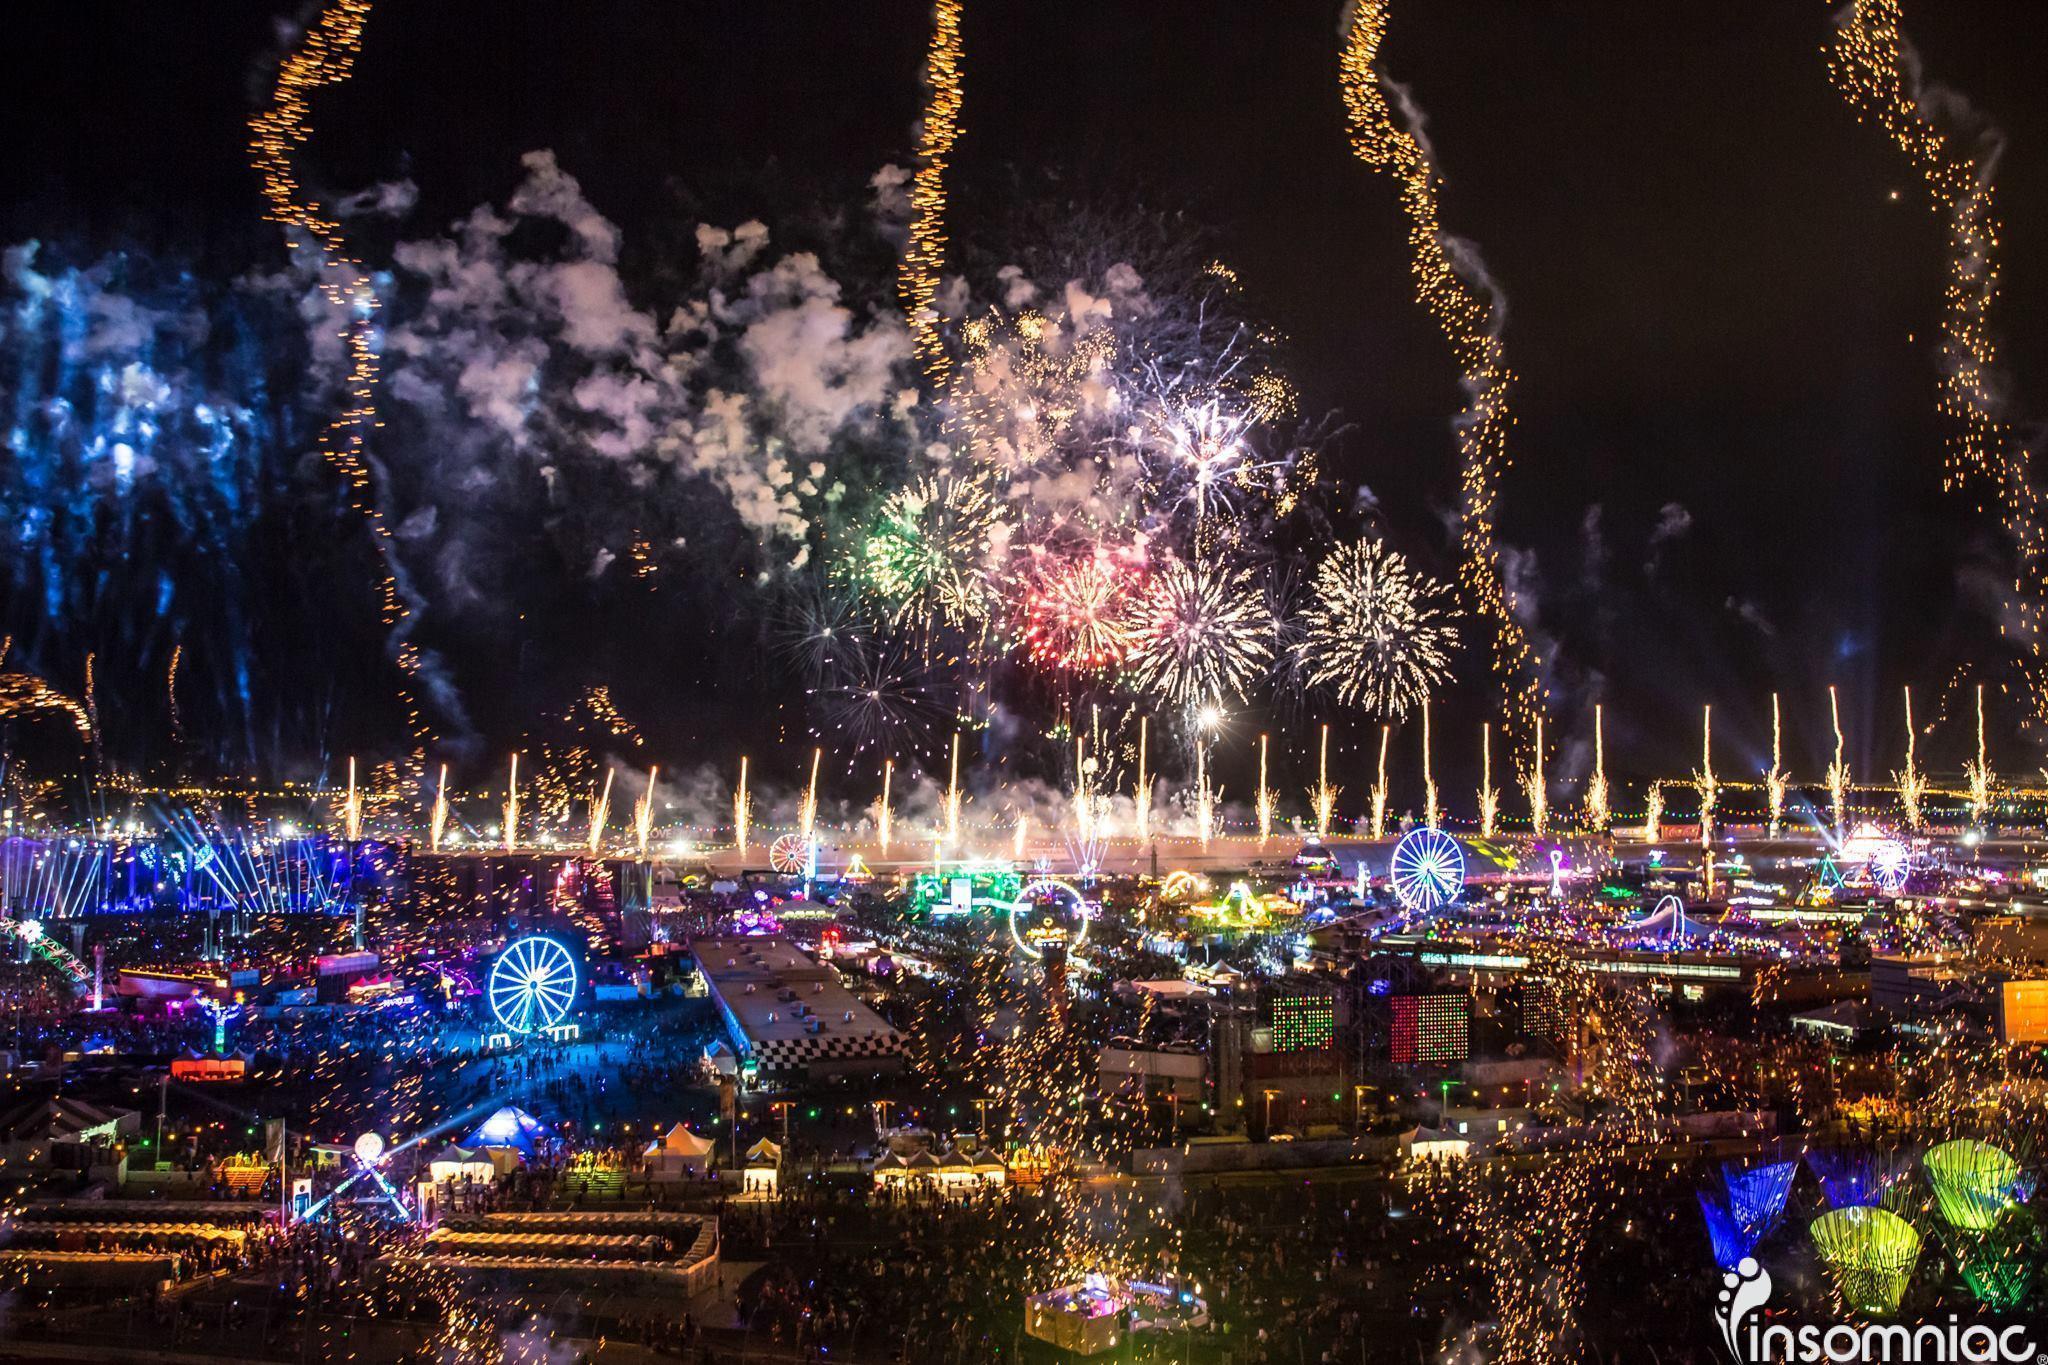 Best HD image of EDC Vegas 2014